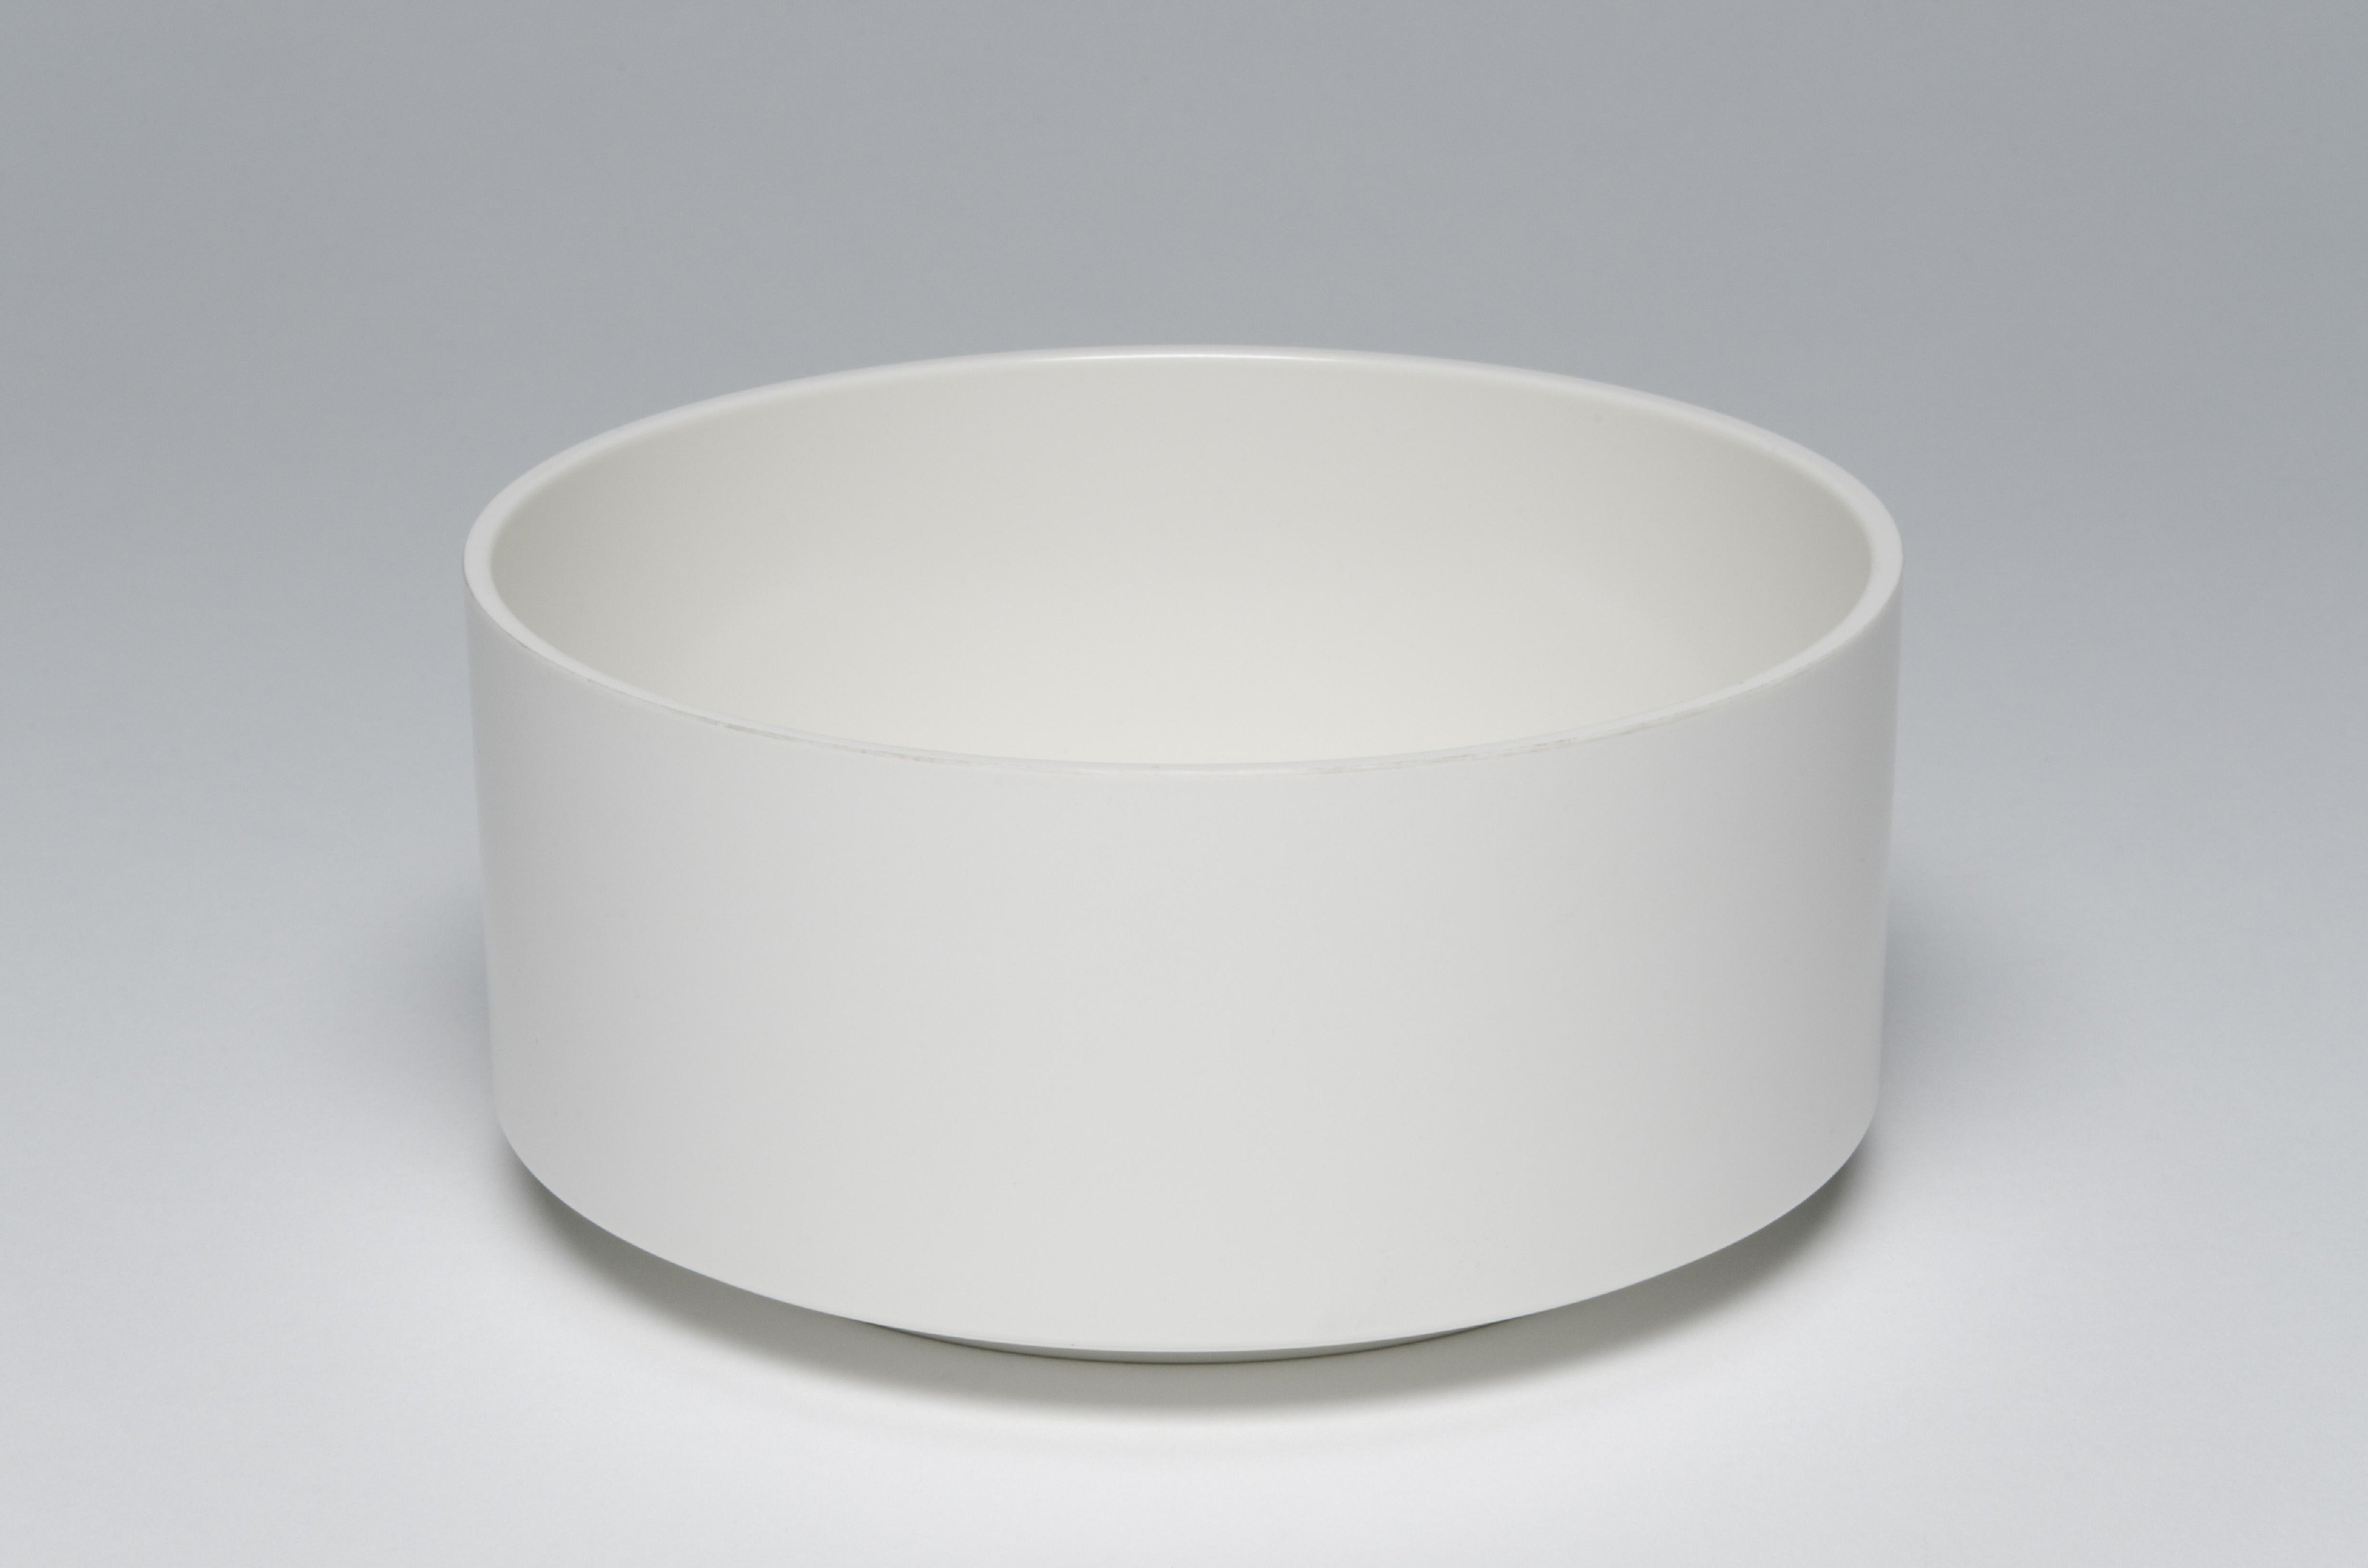 Soup Bowl. Designed by Lella Vignelli and Massimo Vignelli. 1964. Made by Heller Designs, Inc., New York, (1971–present). Medium: Melamine